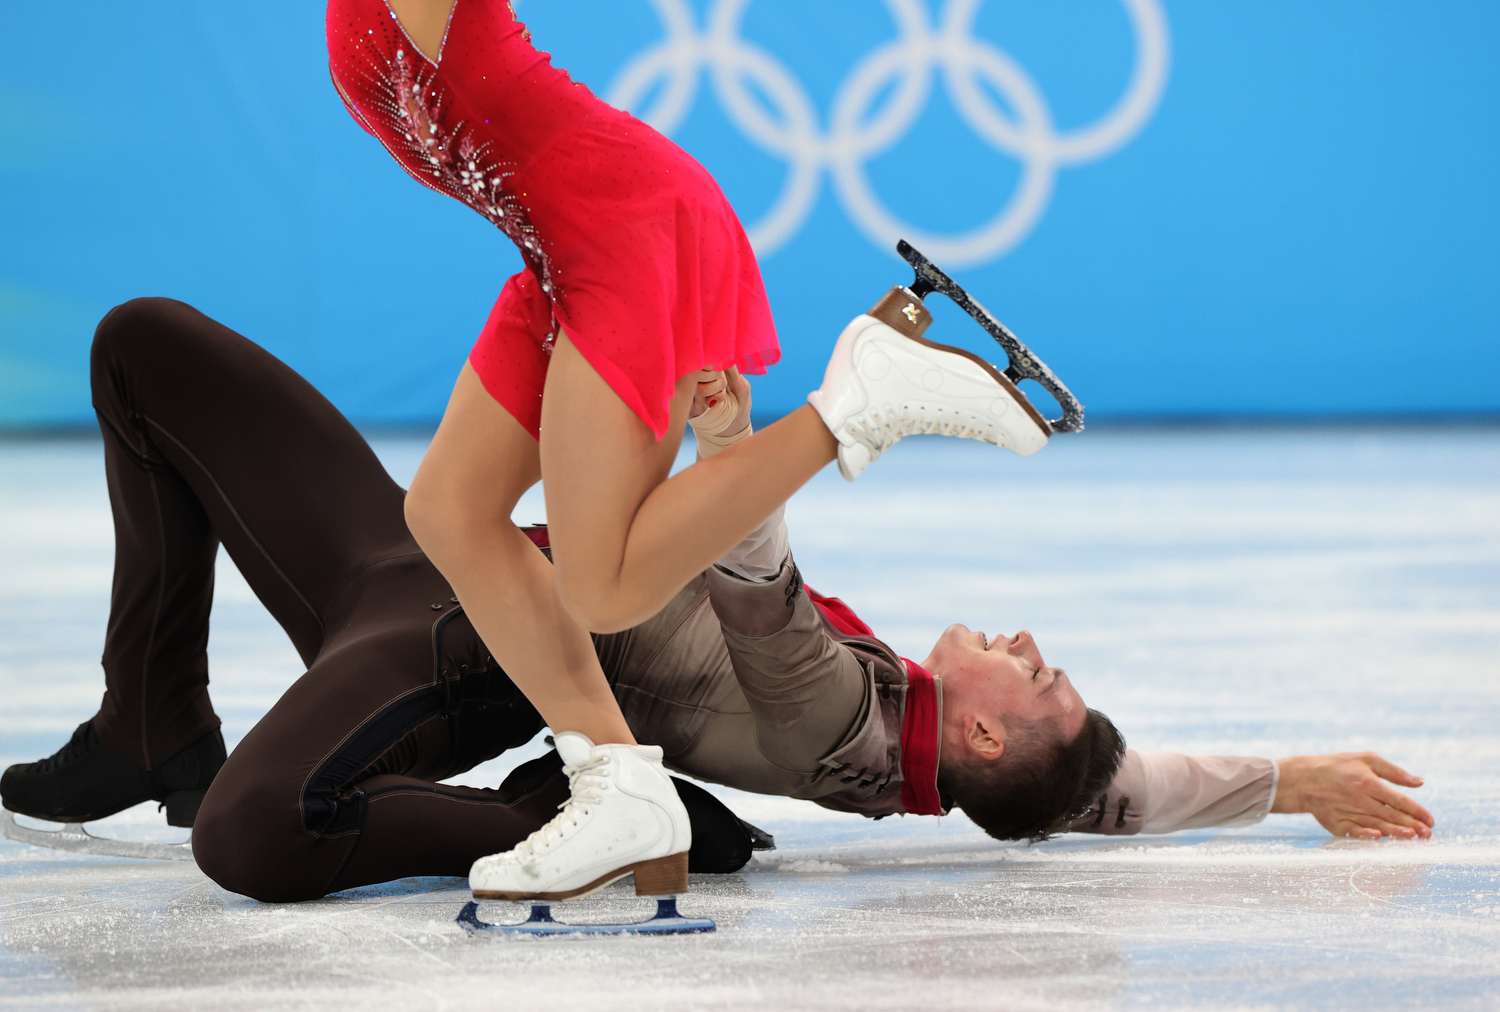 Beijing 2022 Winter Olympic Games_Anastasia Mishina and Aleksandr Galliamov of Russia skate in the Pair Skating Short Program Te